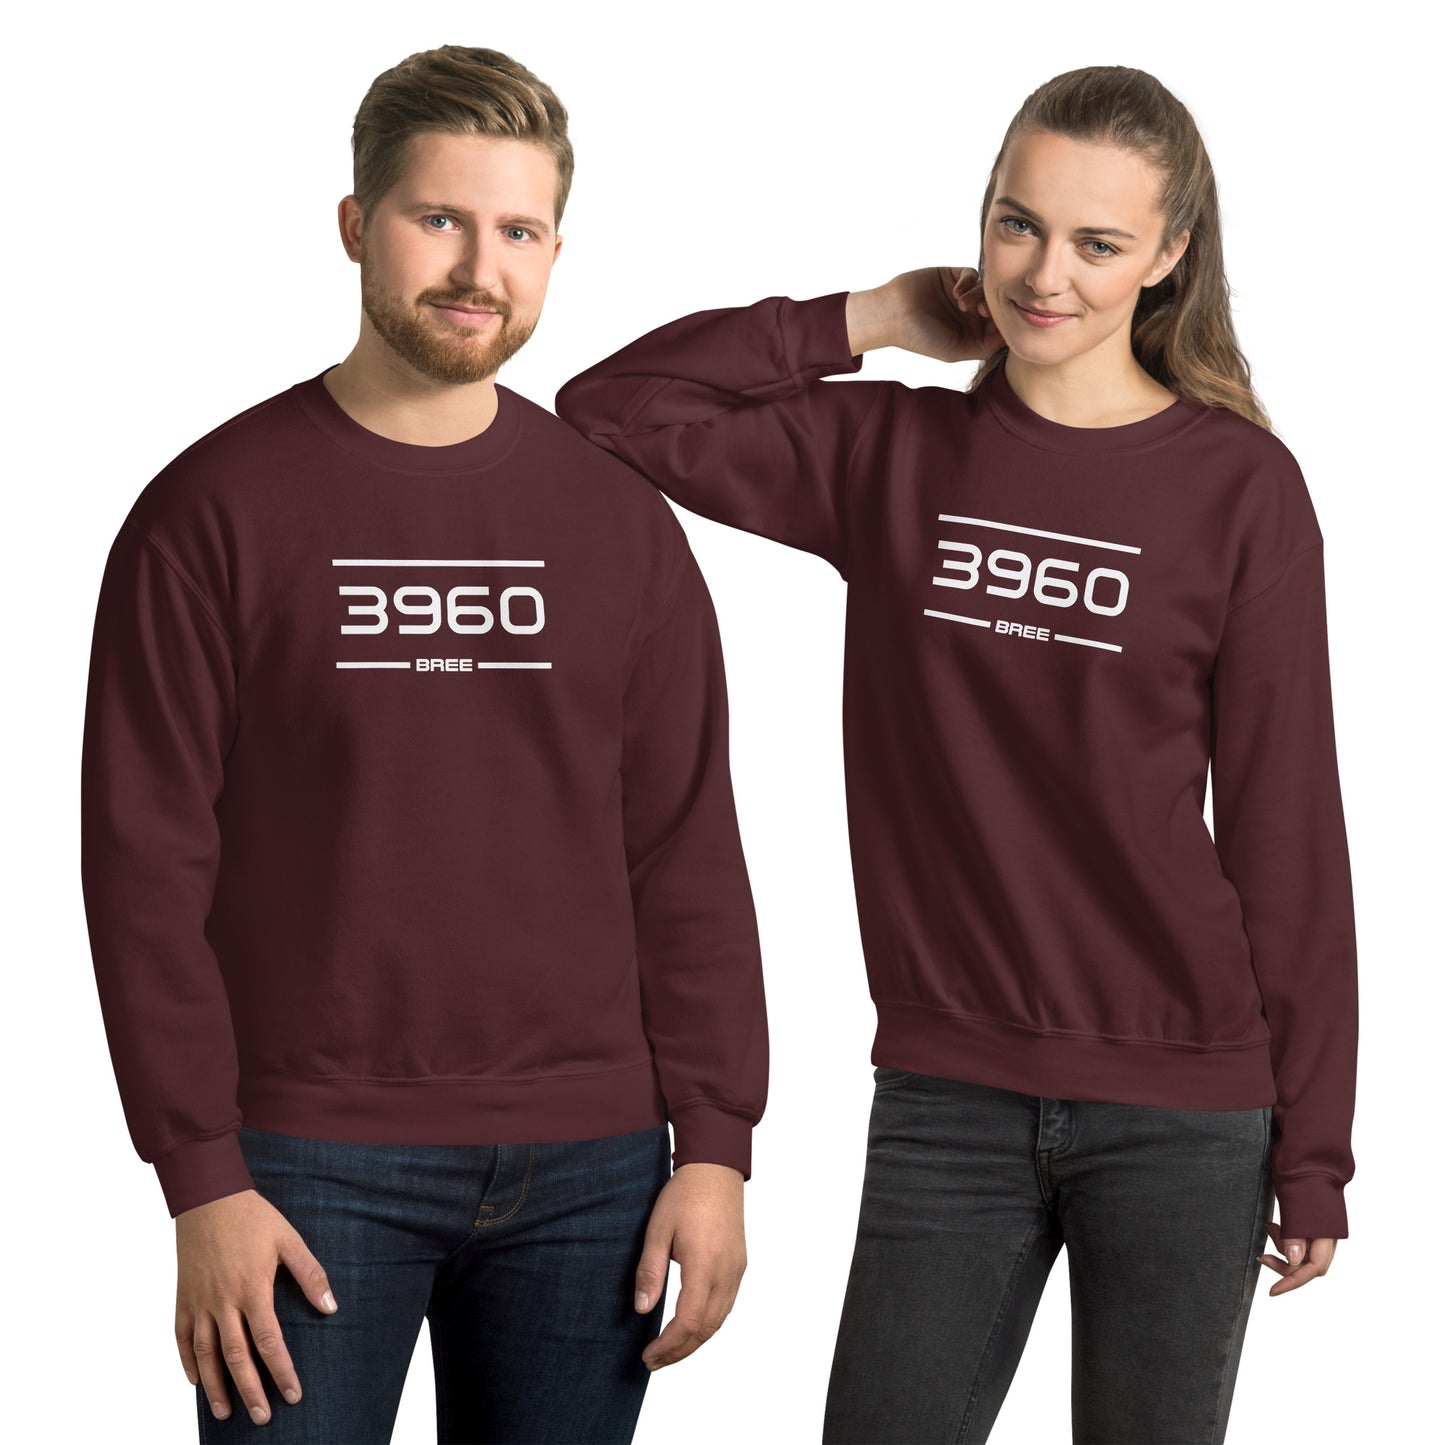 Sweater - 3960 - Bree (M/V)